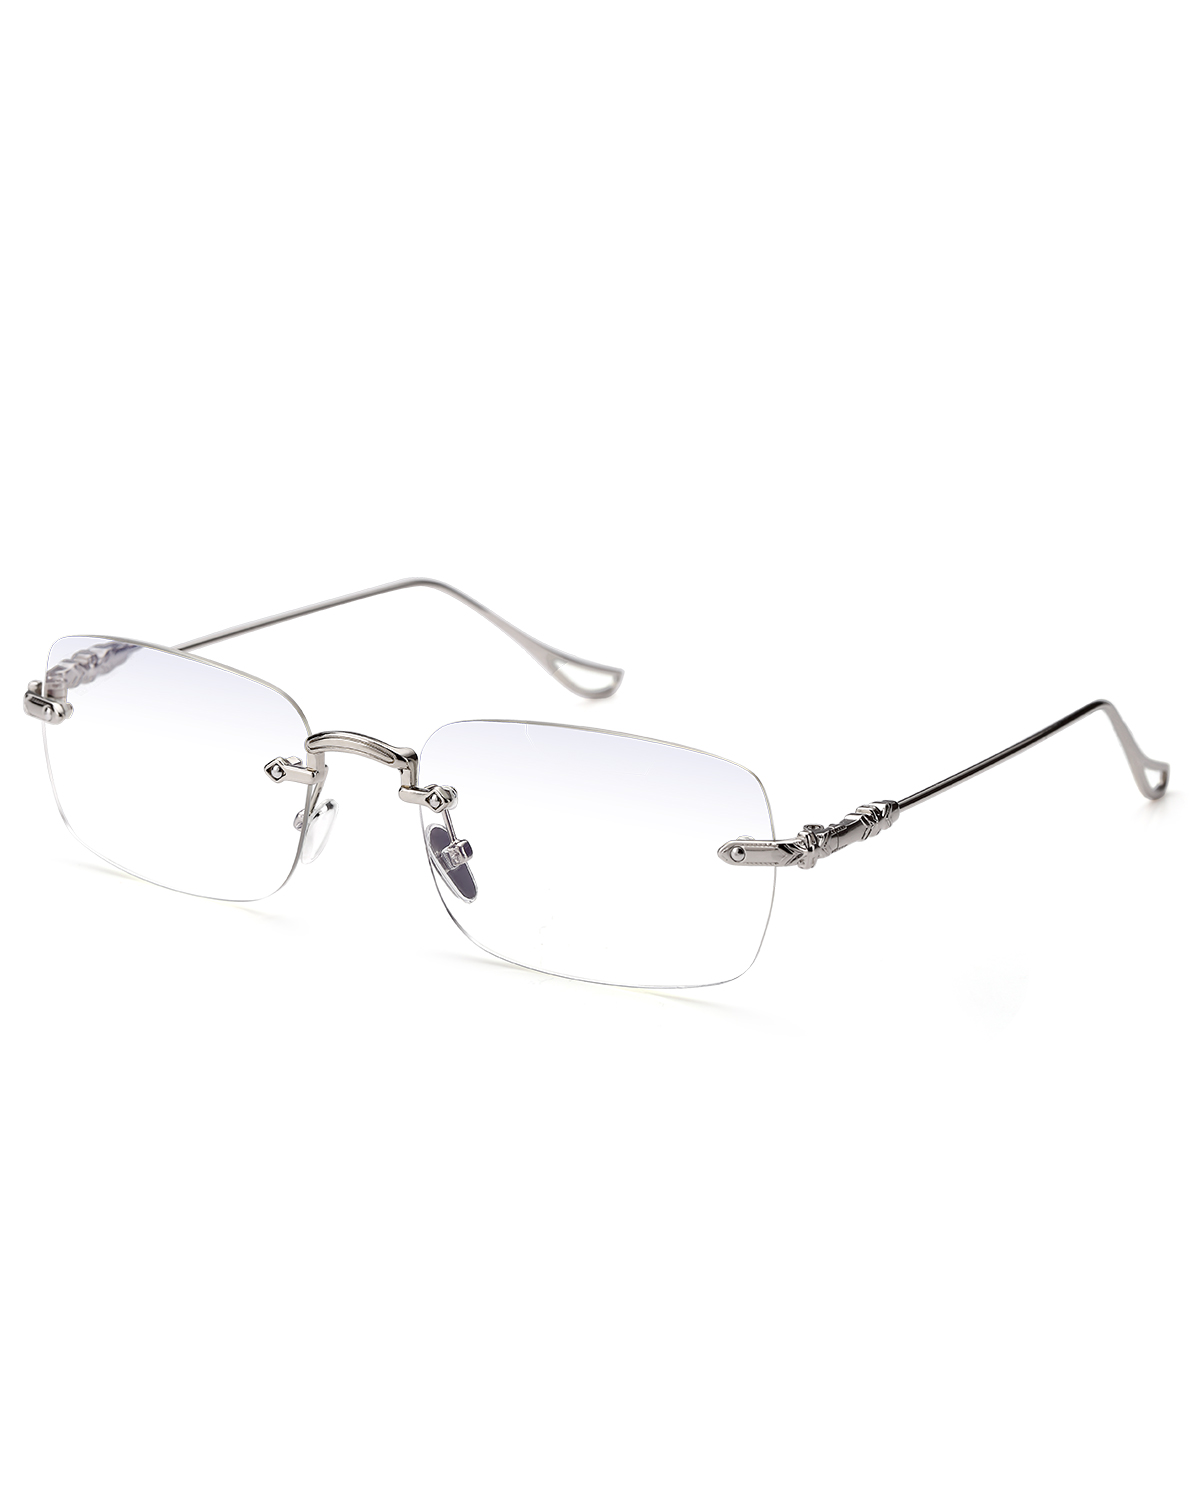 TERAISE Frameless Metal Reading Glasses for Men/Women Blue Light Blocking -Rimless Fashion Comfortable Computer Eyeglasses-TERAISE